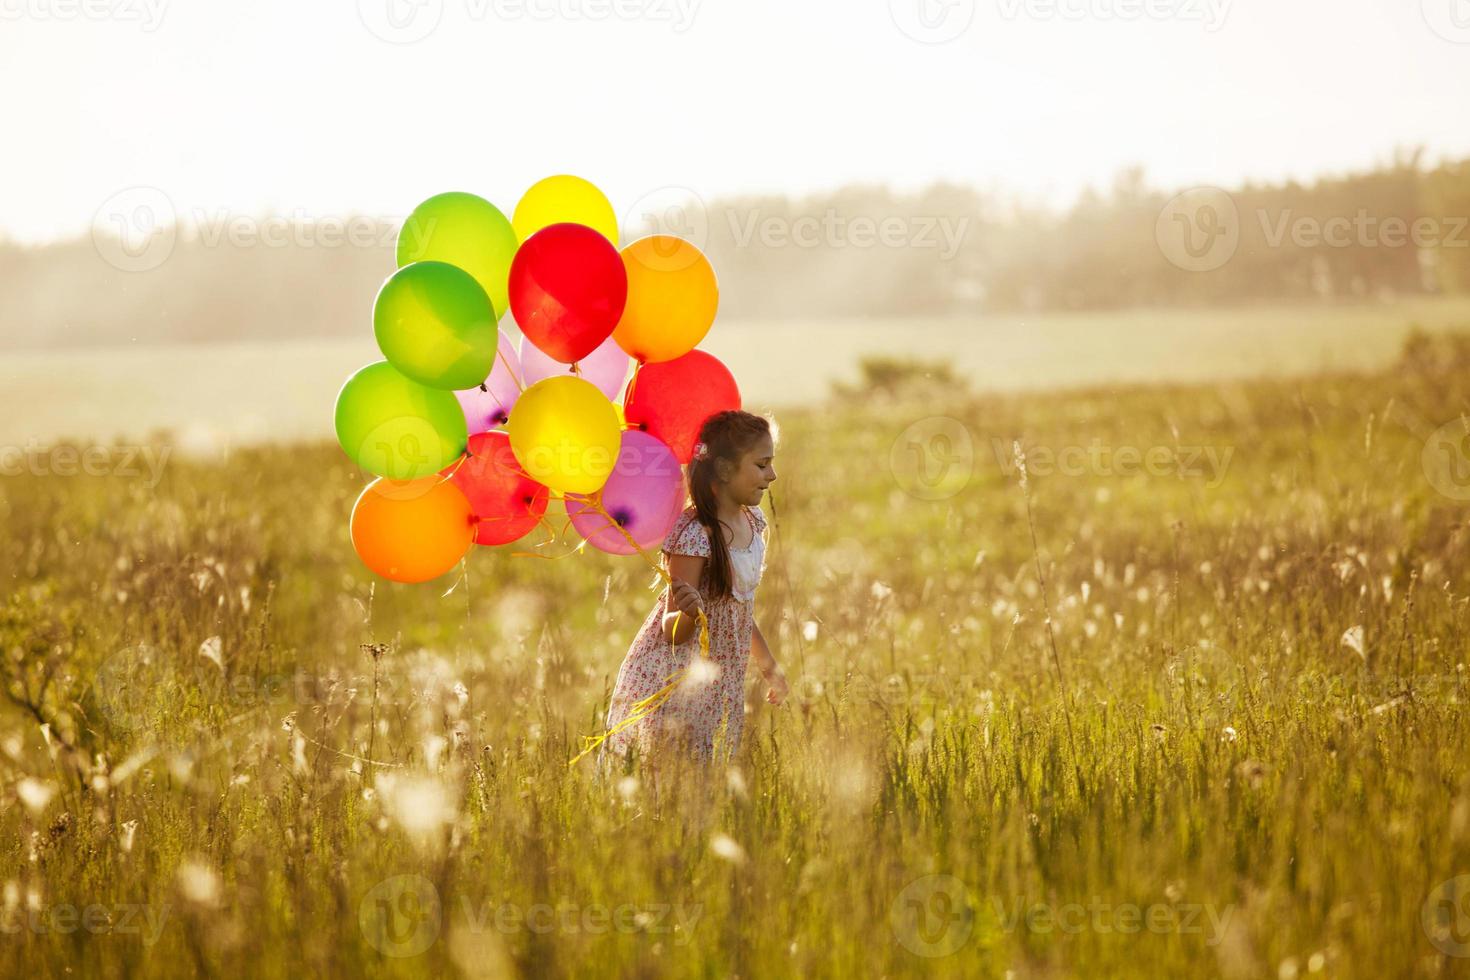 meisje met een bos ballonnen foto